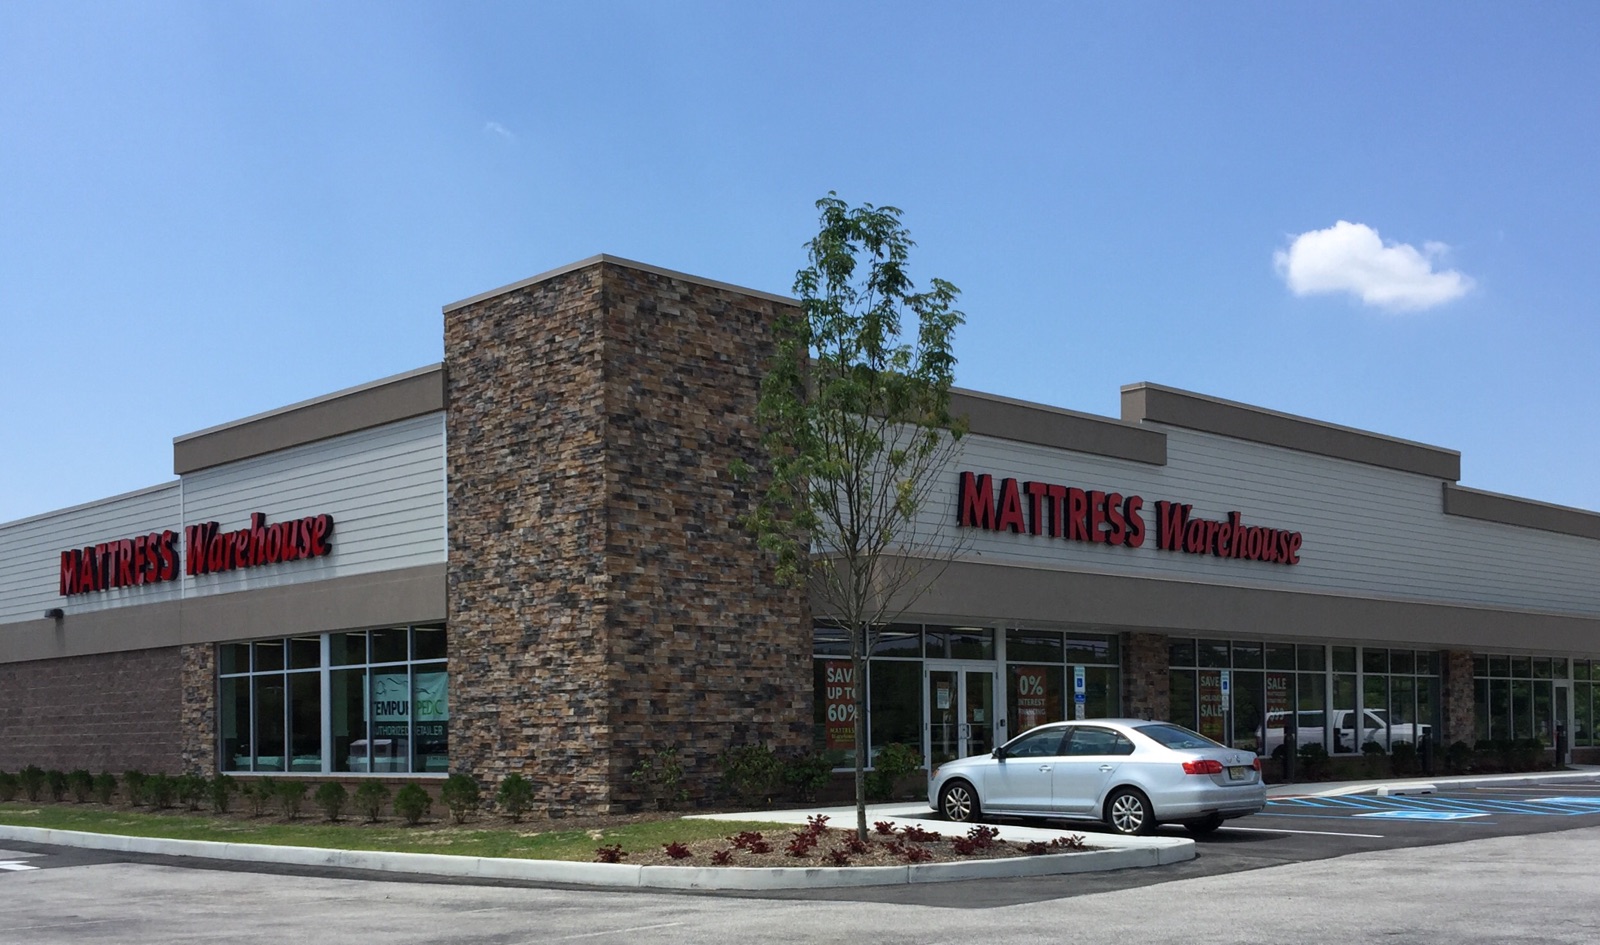 Mattress Warehouse of Turnersville